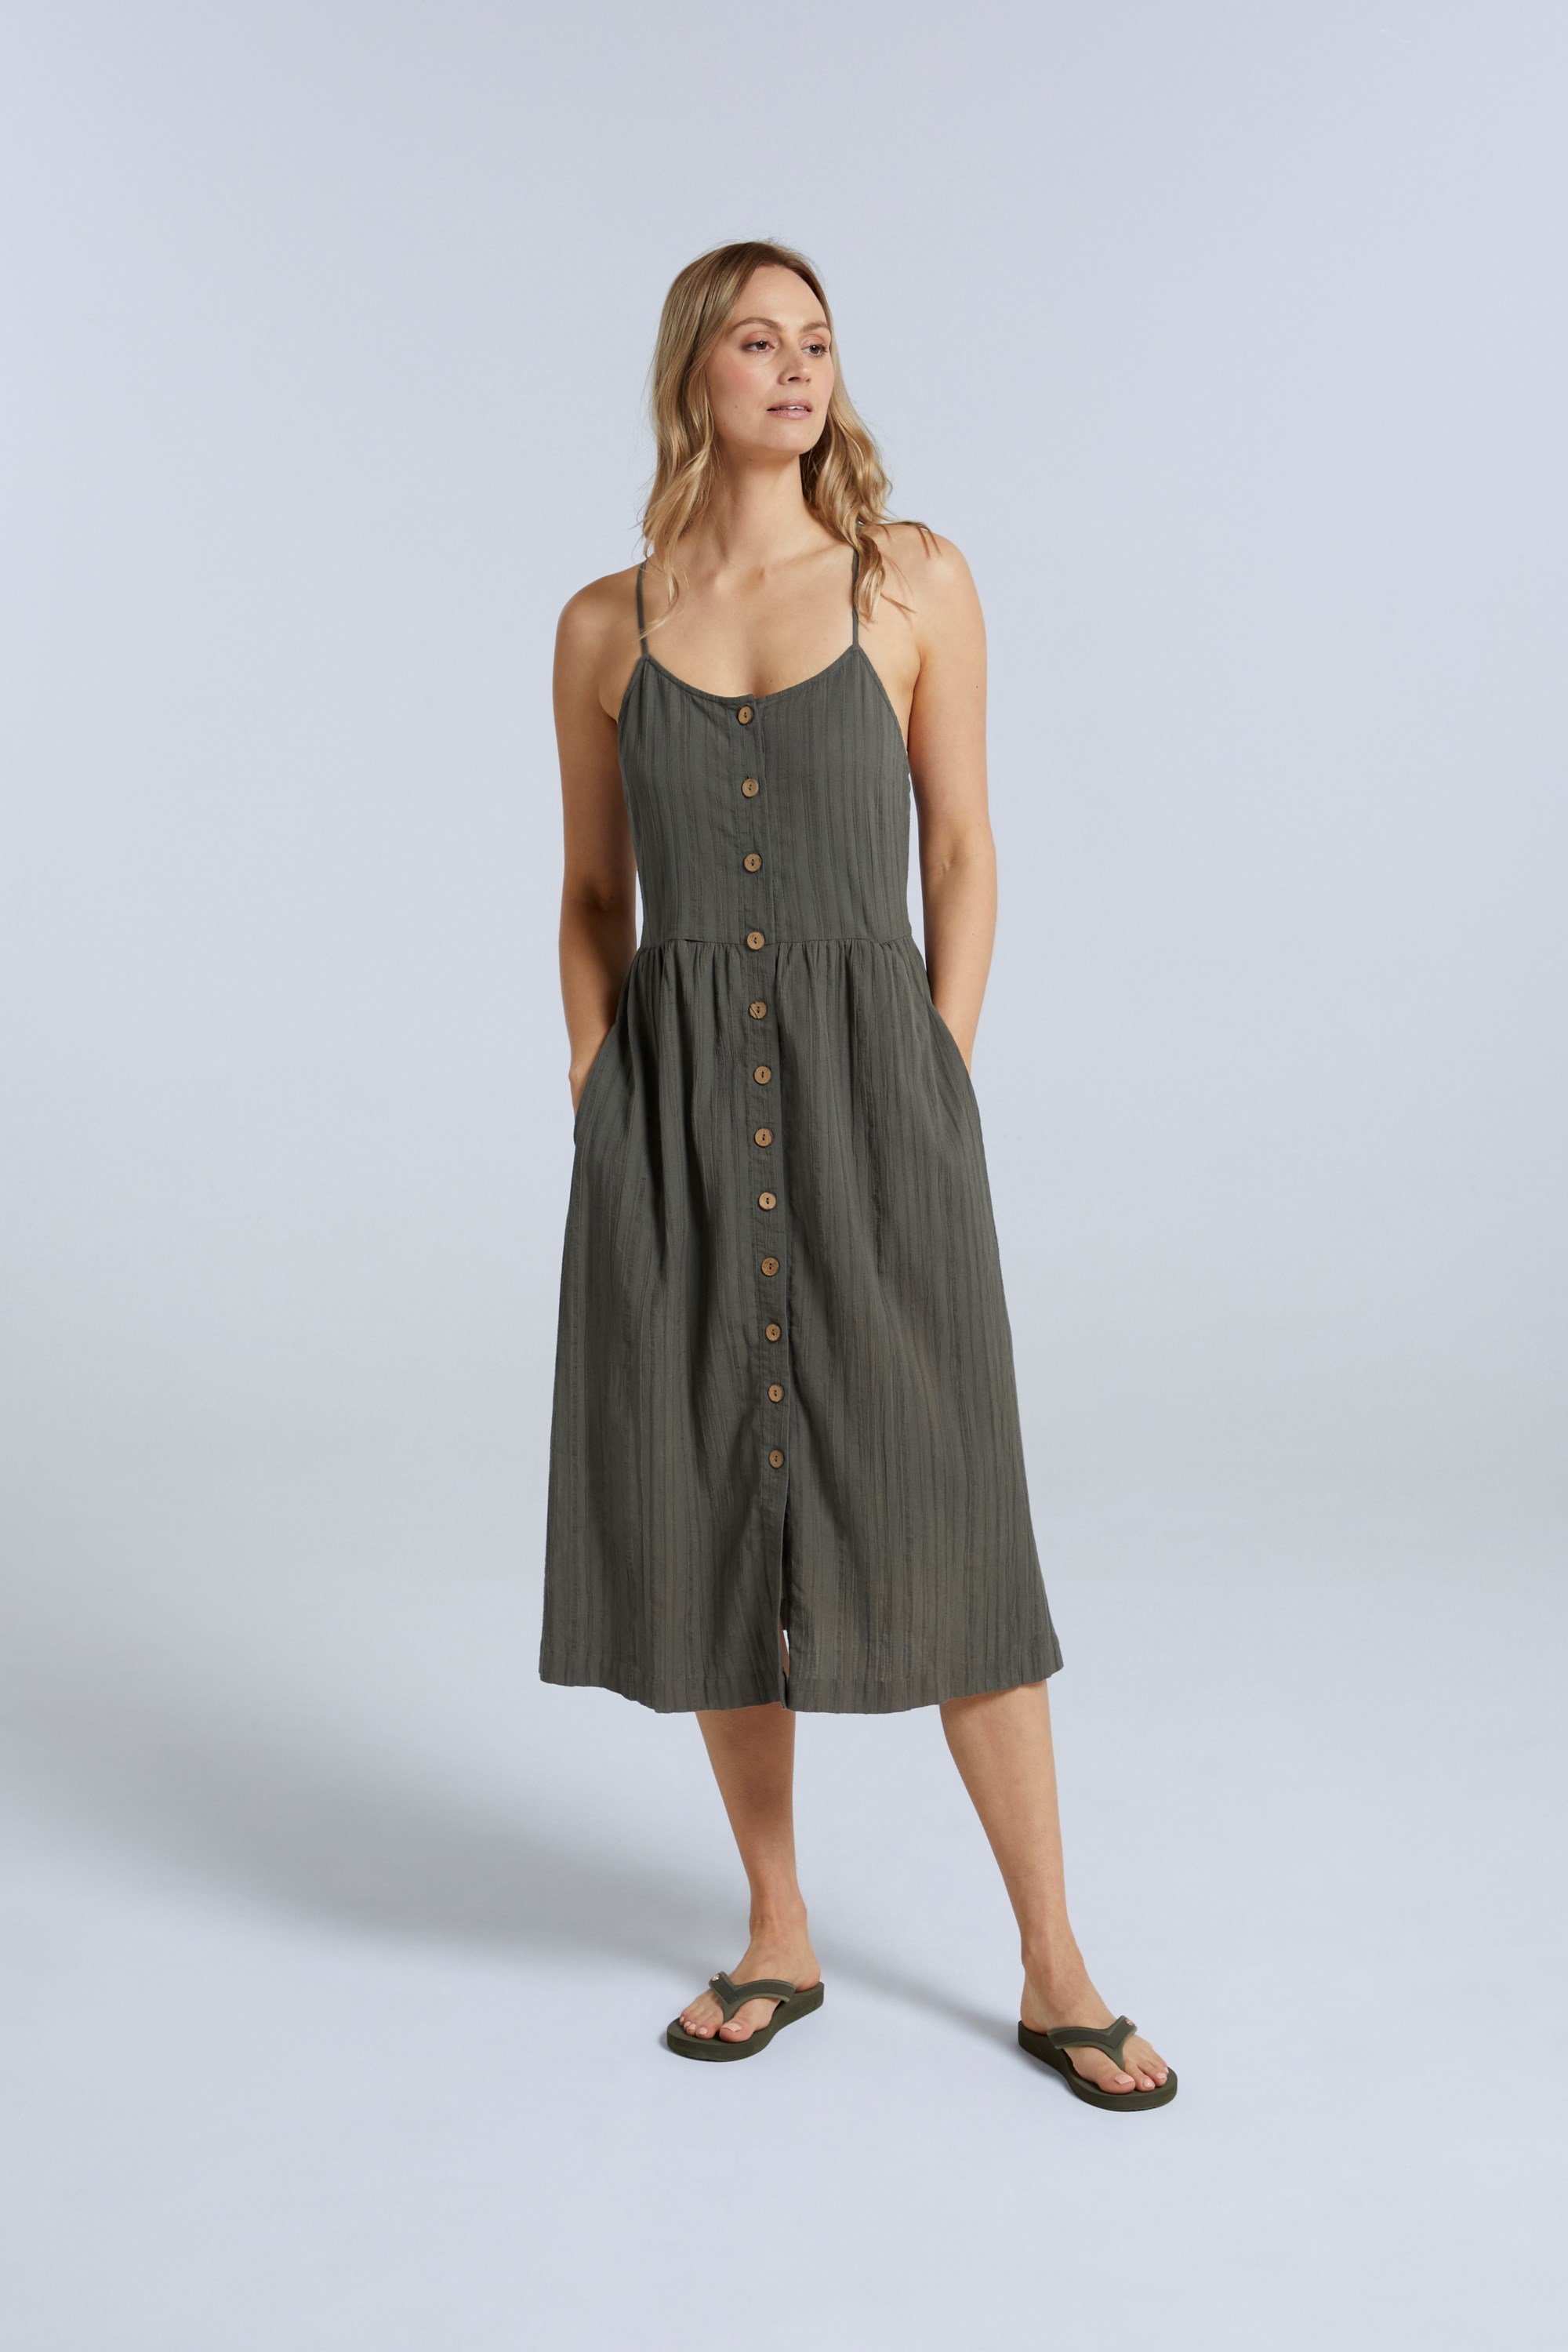 Amelia Womens Organic Dress - Green